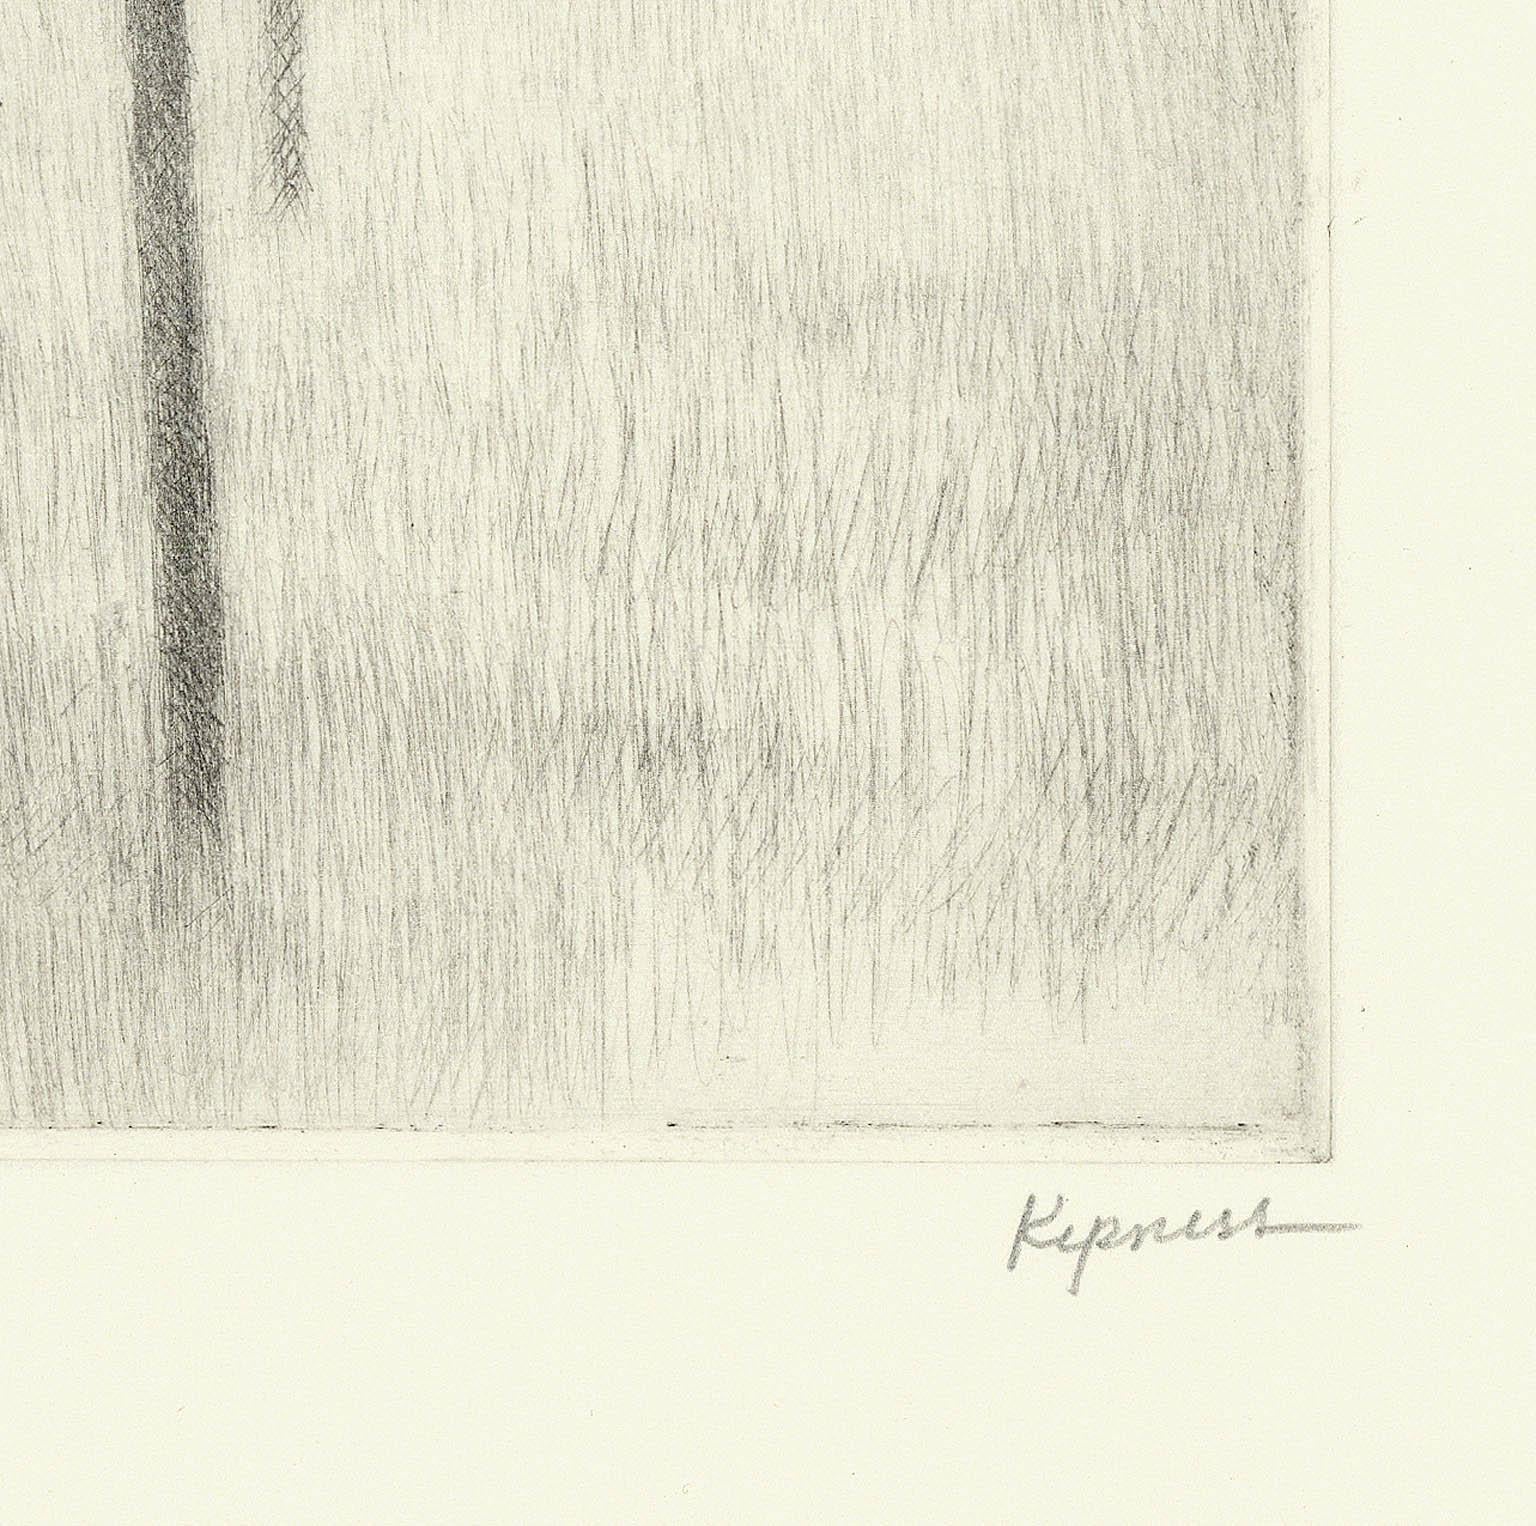 Slope w.five trees - Print by Robert Kipniss